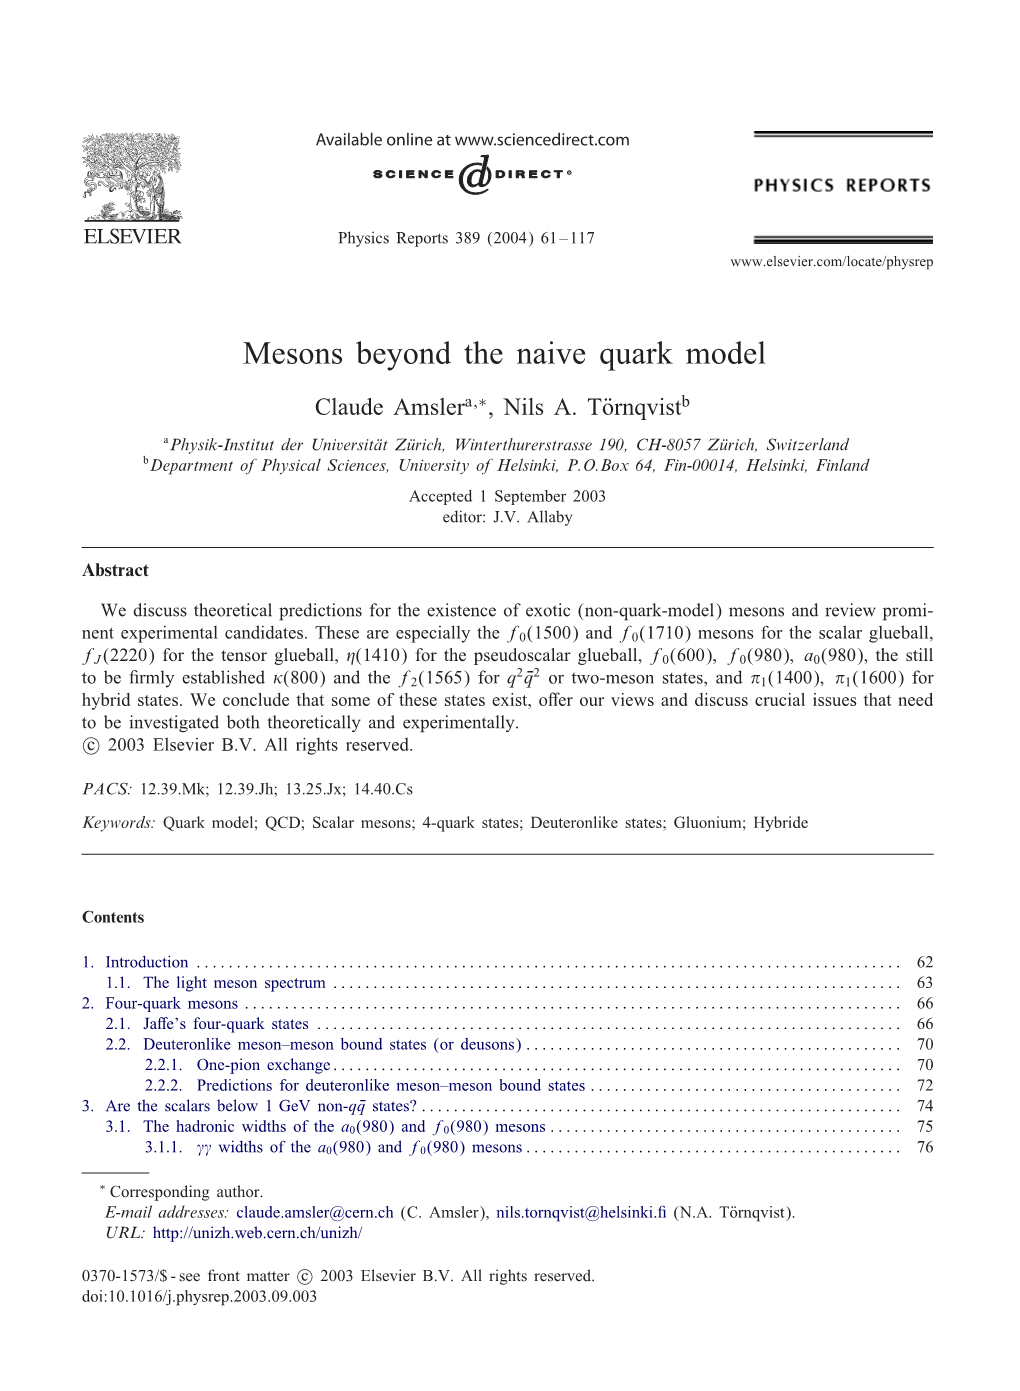 Mesons Beyond the Naive Quark Model